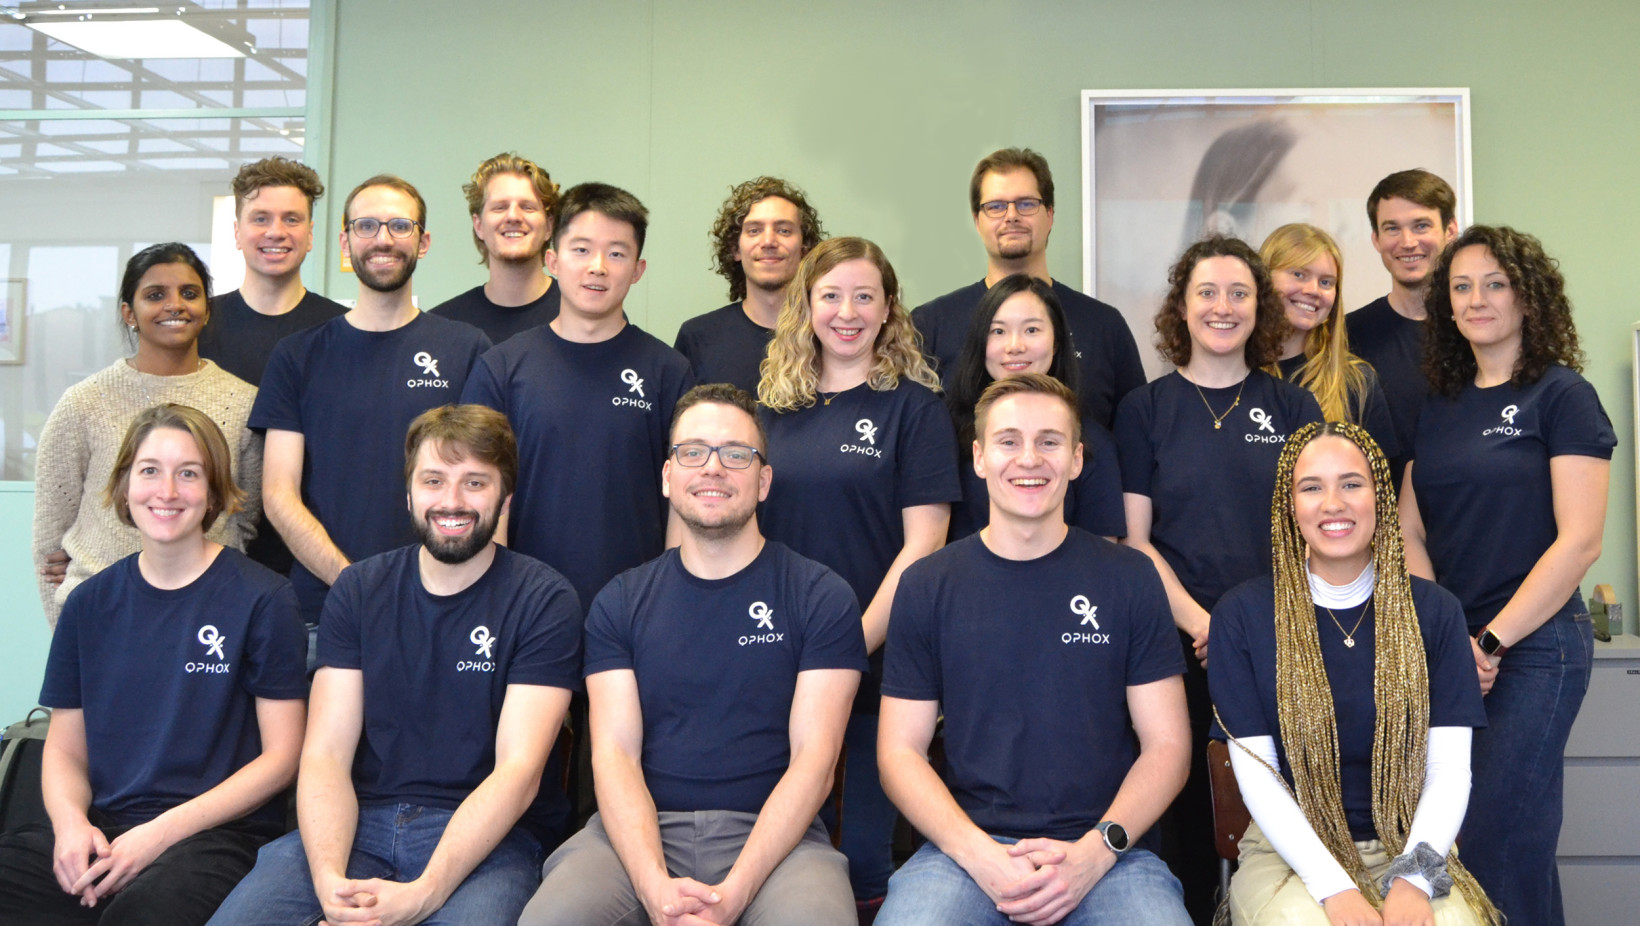 A team photo of the QphoX quantum startup company 